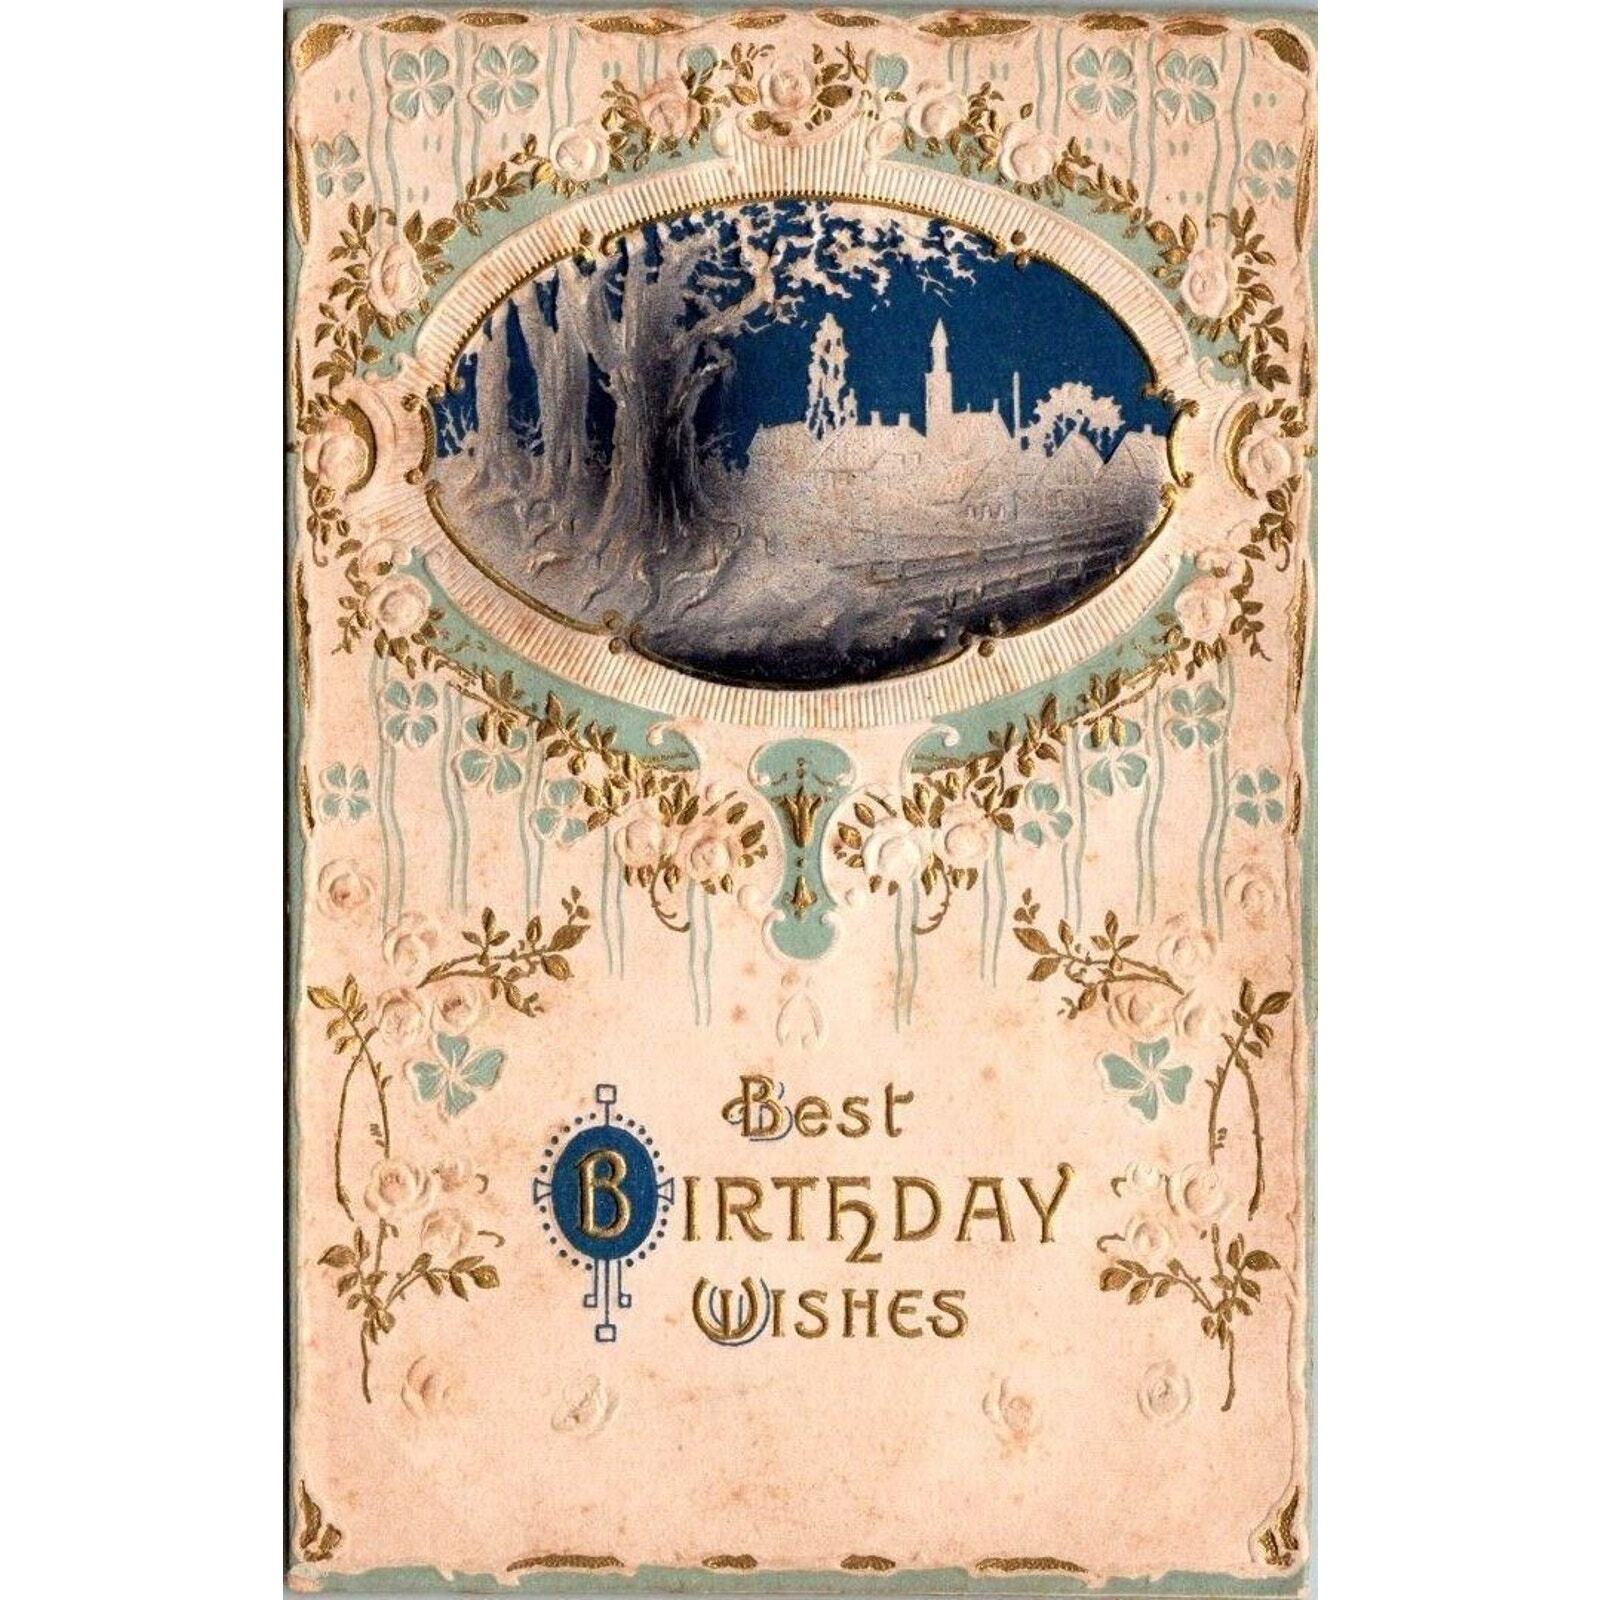 Vintage Postcard Embossed Birthday Wishes with House, Flowers Tree Postmark 1914